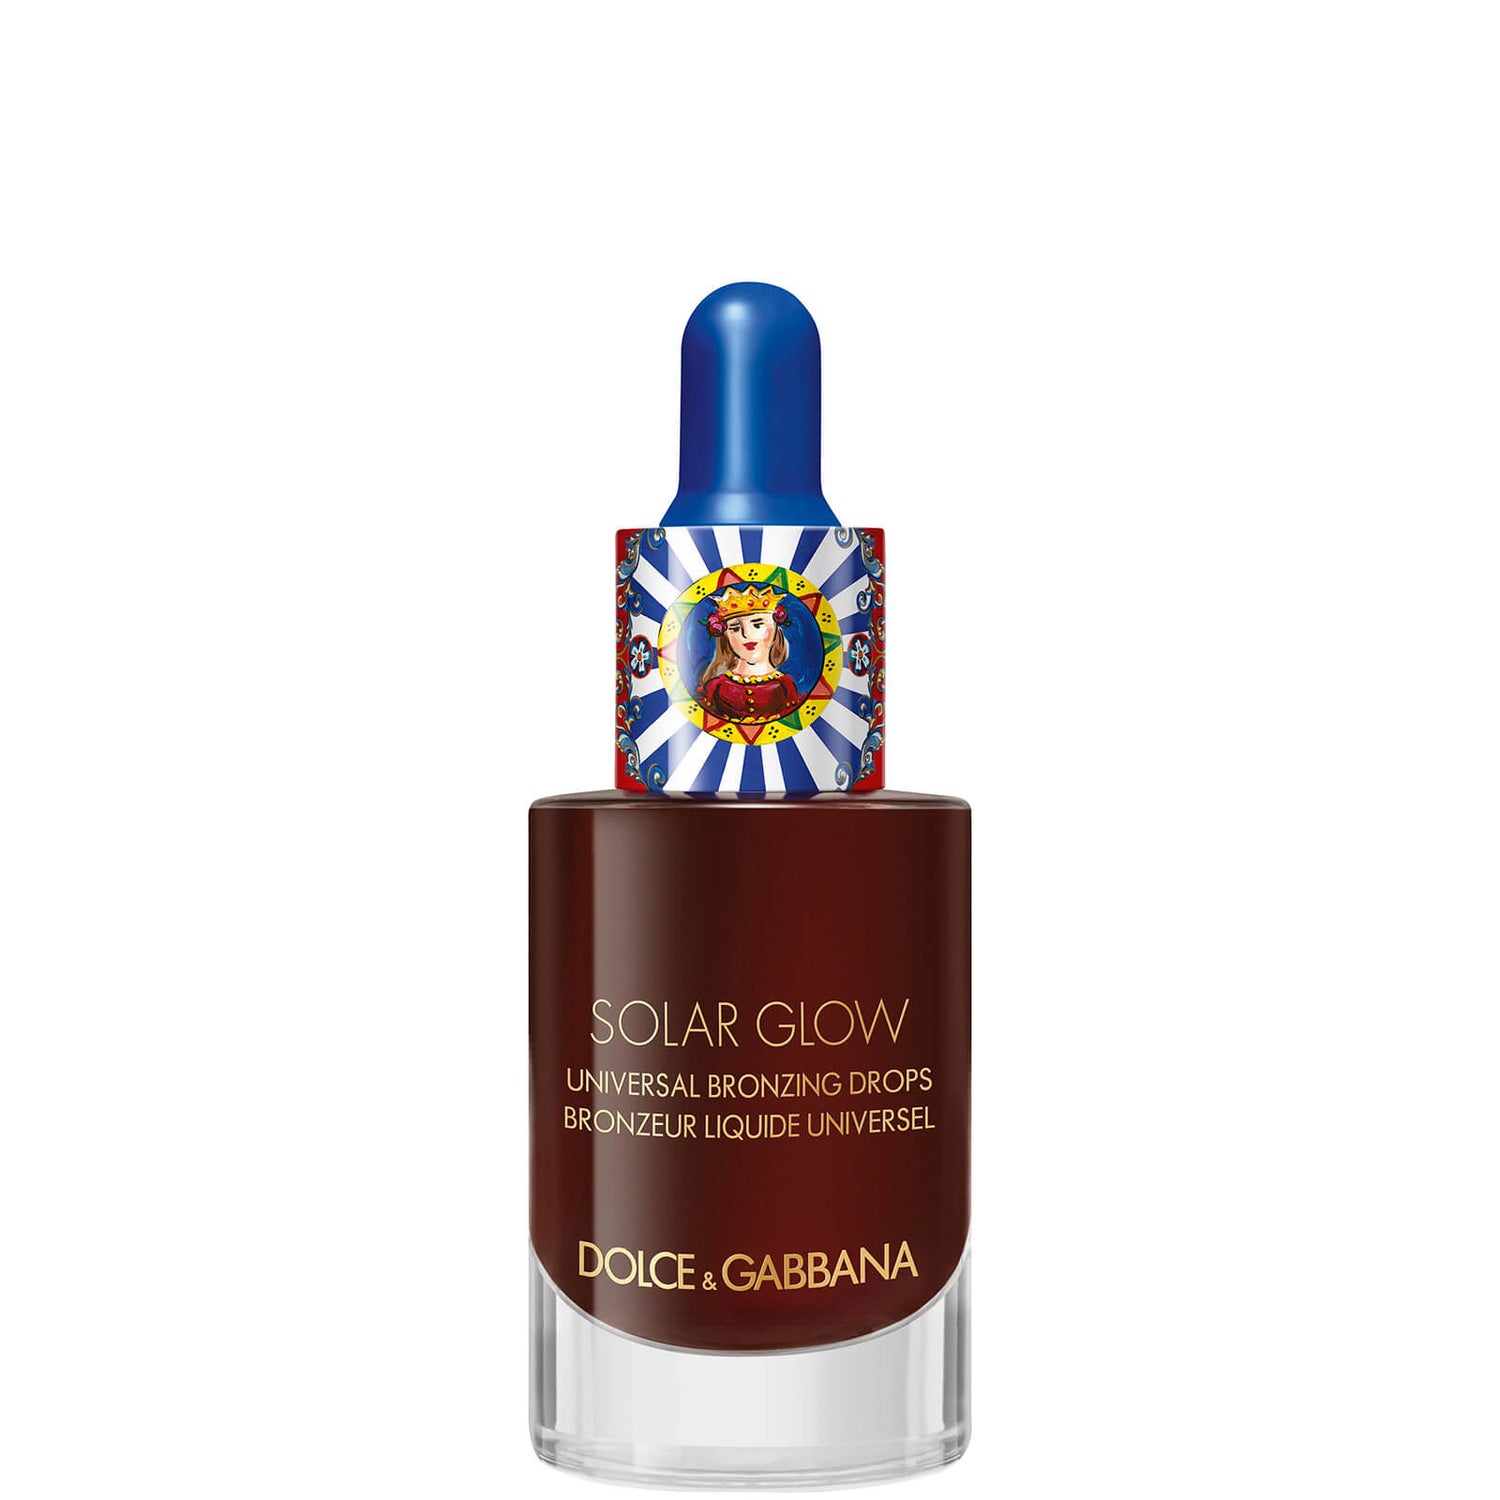 Gouttes de bronzeur liquide universel Solar Glow Dolce&Gabbana 15 ml